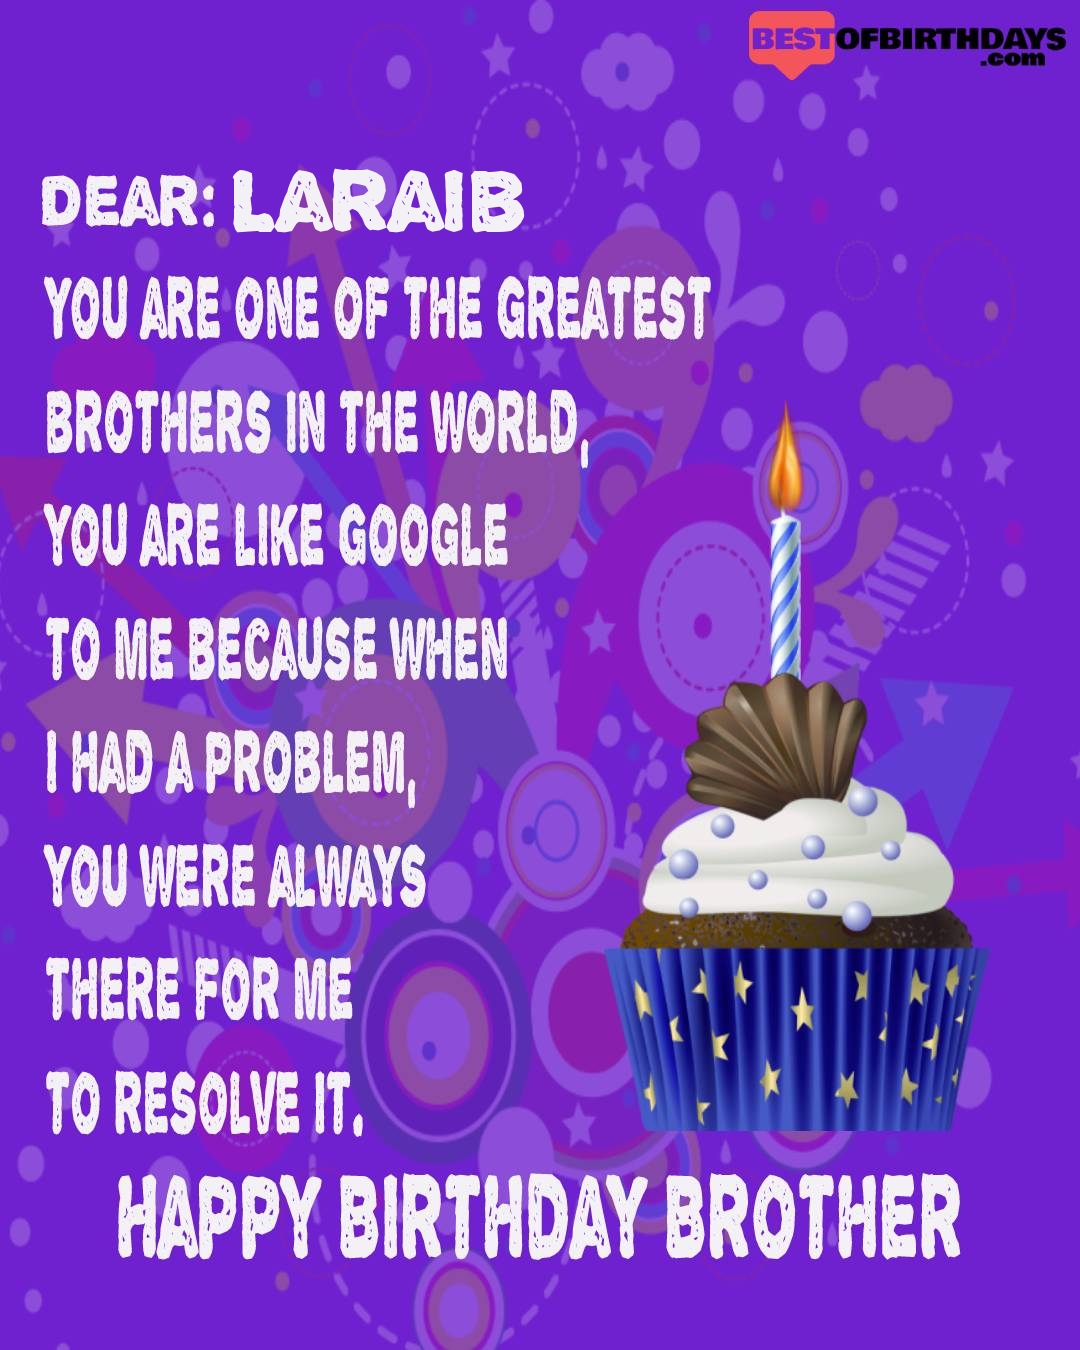 Happy birthday laraib bhai brother bro